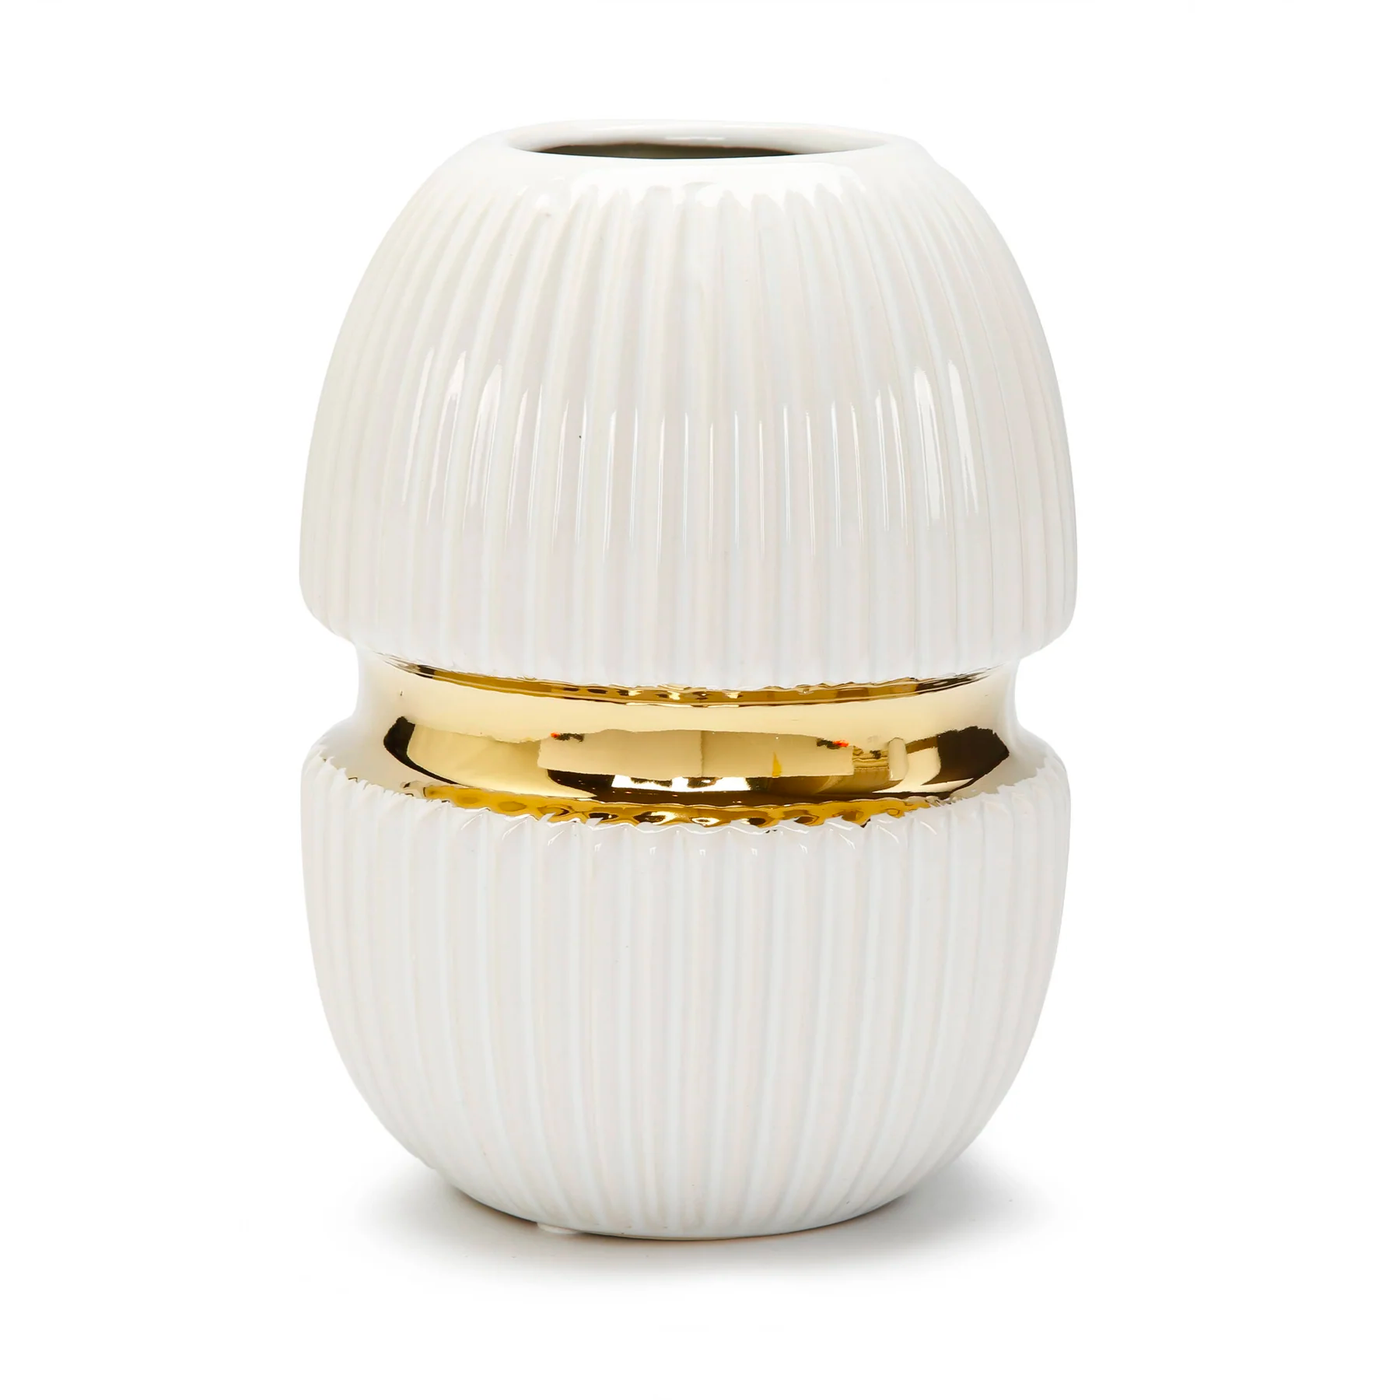 8" White Ceramic Vase Gold Center Design (1 Count) - Set With Style